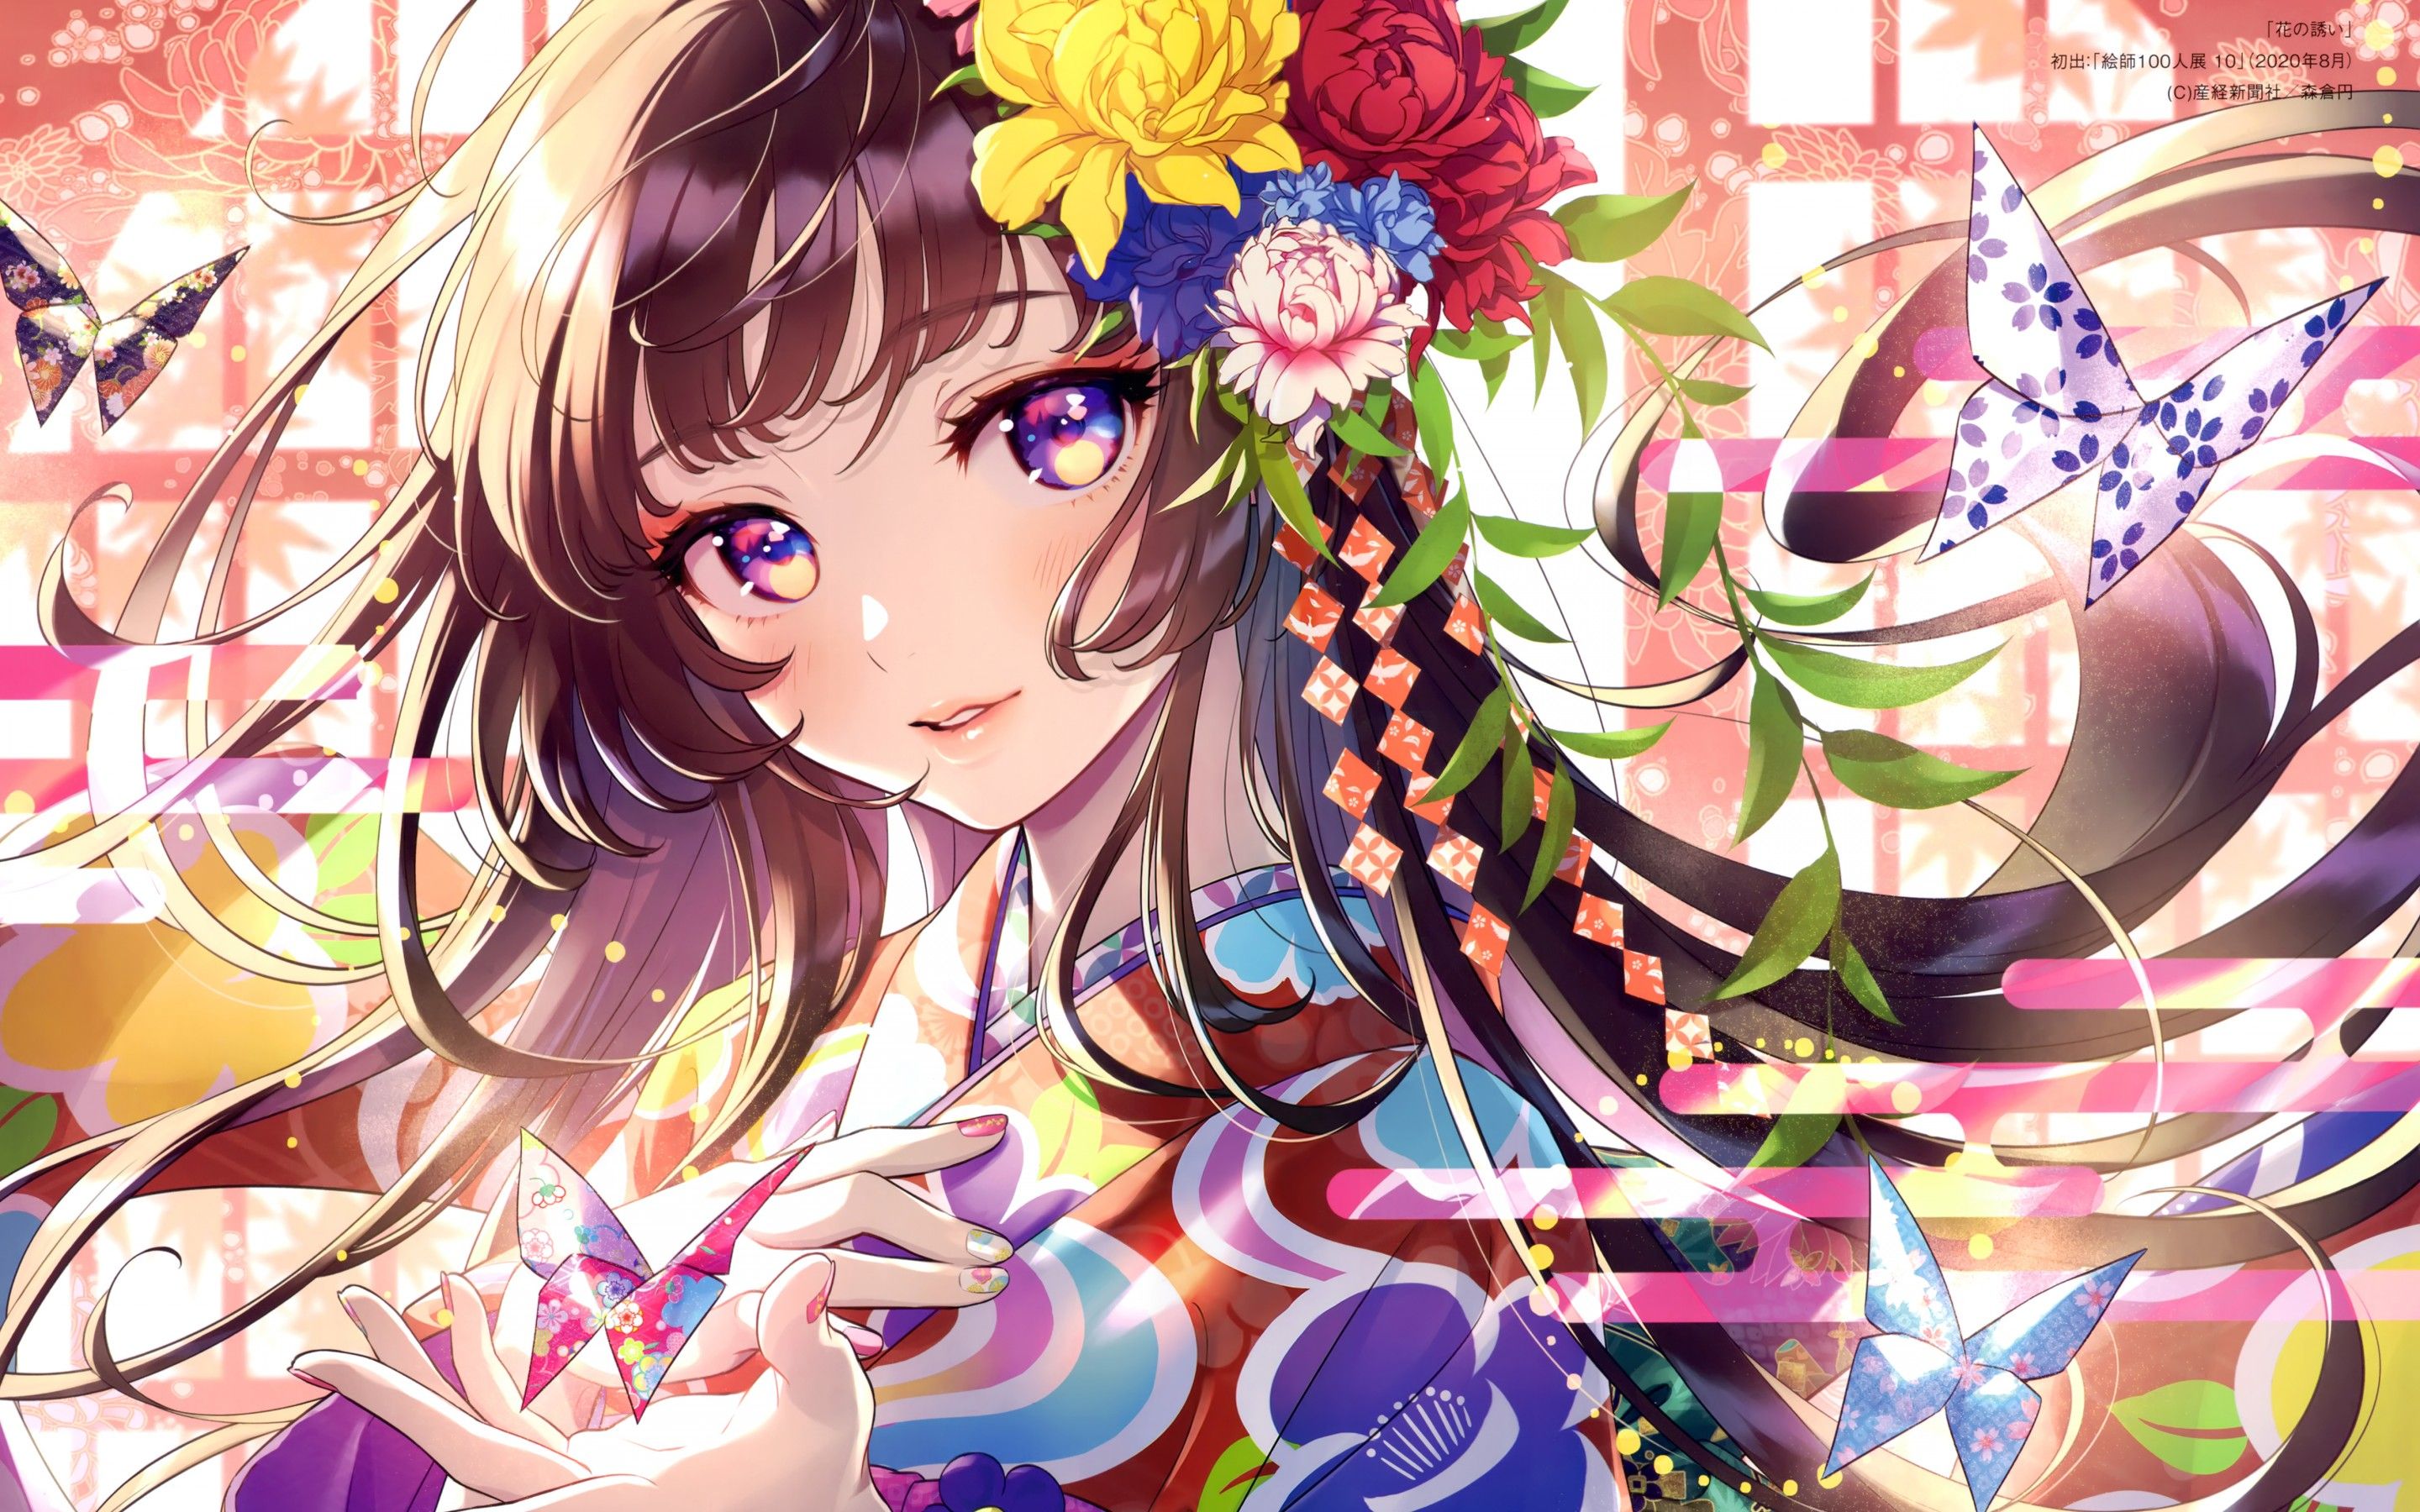 Anime girl 4K Wallpaper, Floral, Colorful, Girly, Magical, 5K, Fantasy